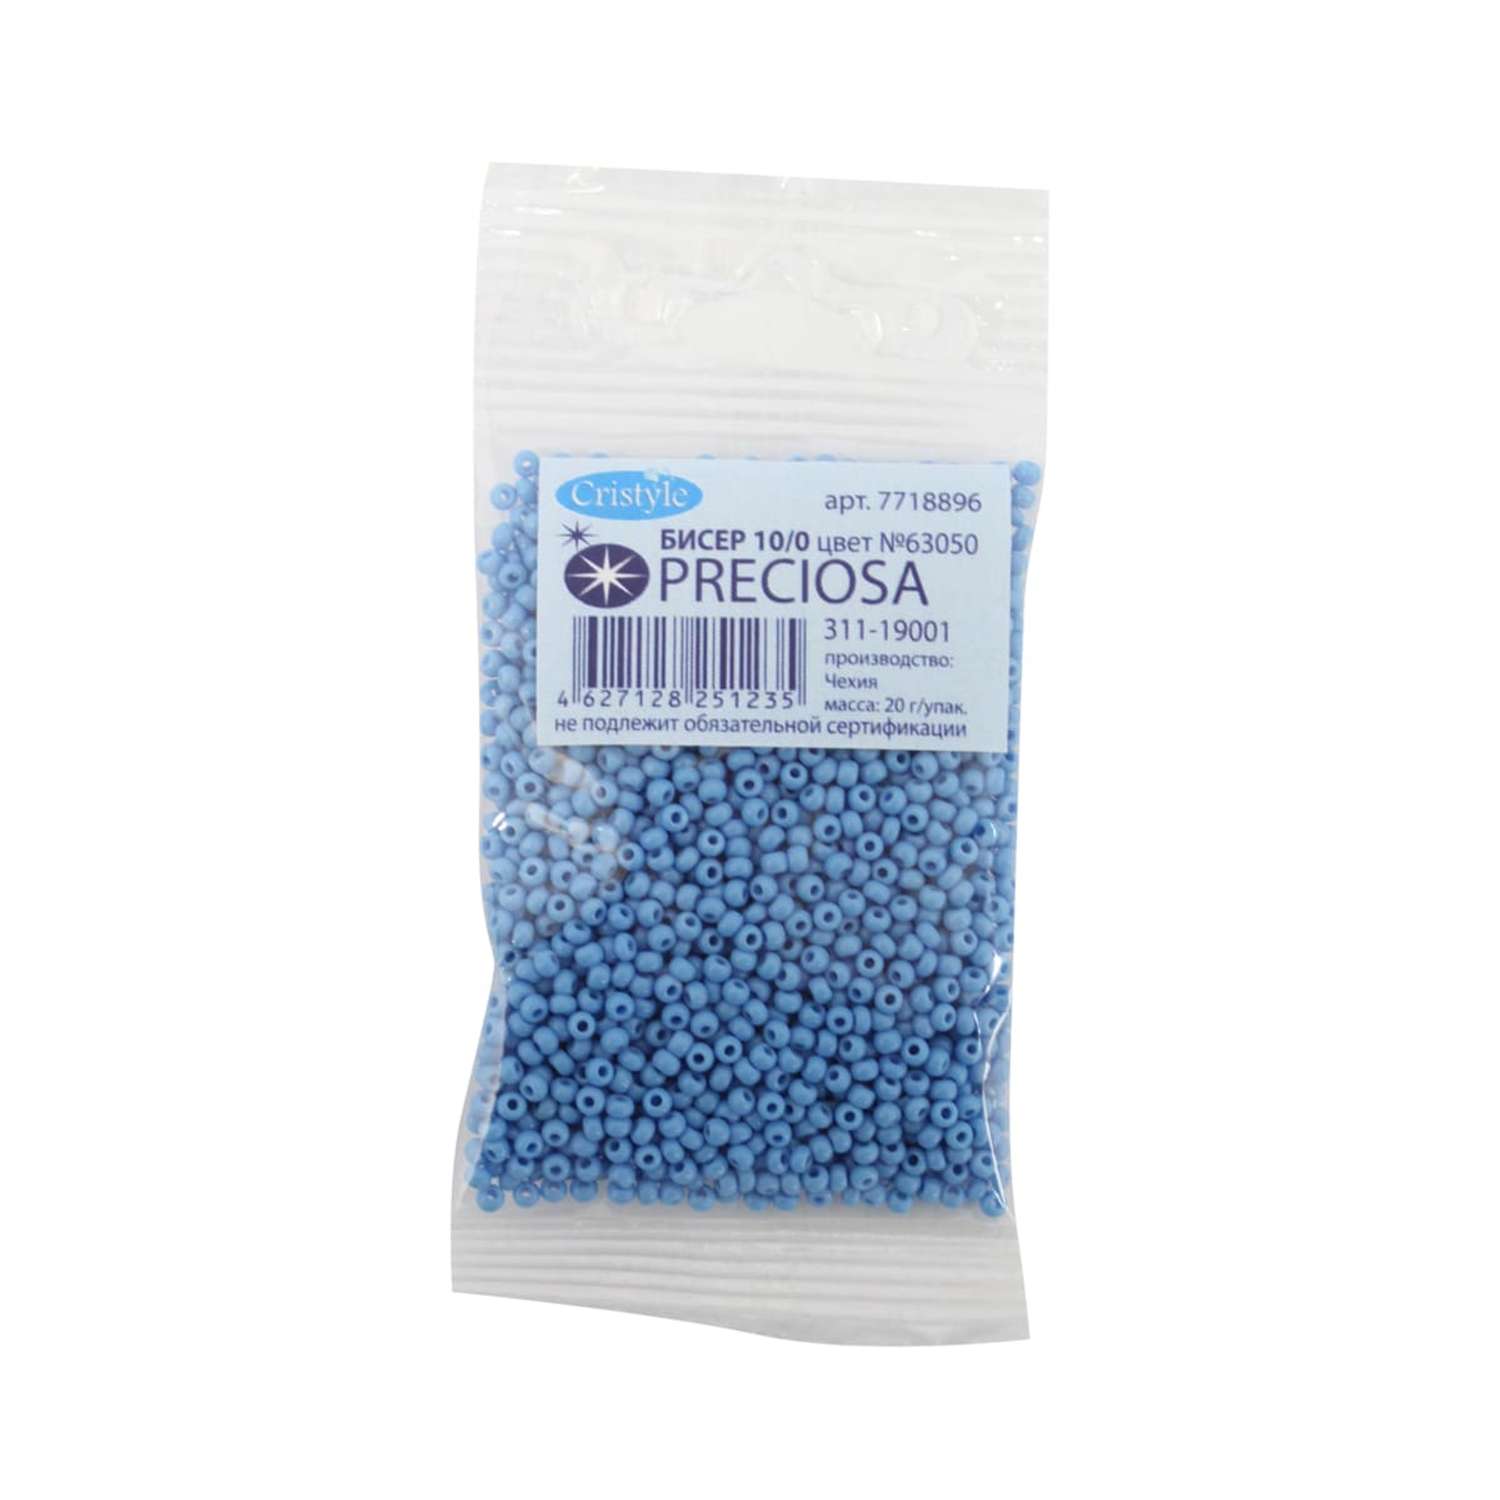 Бисер Preciosa чешский непрозрачный 10/0 20 гр Прециоза 63050 голубой - фото 1